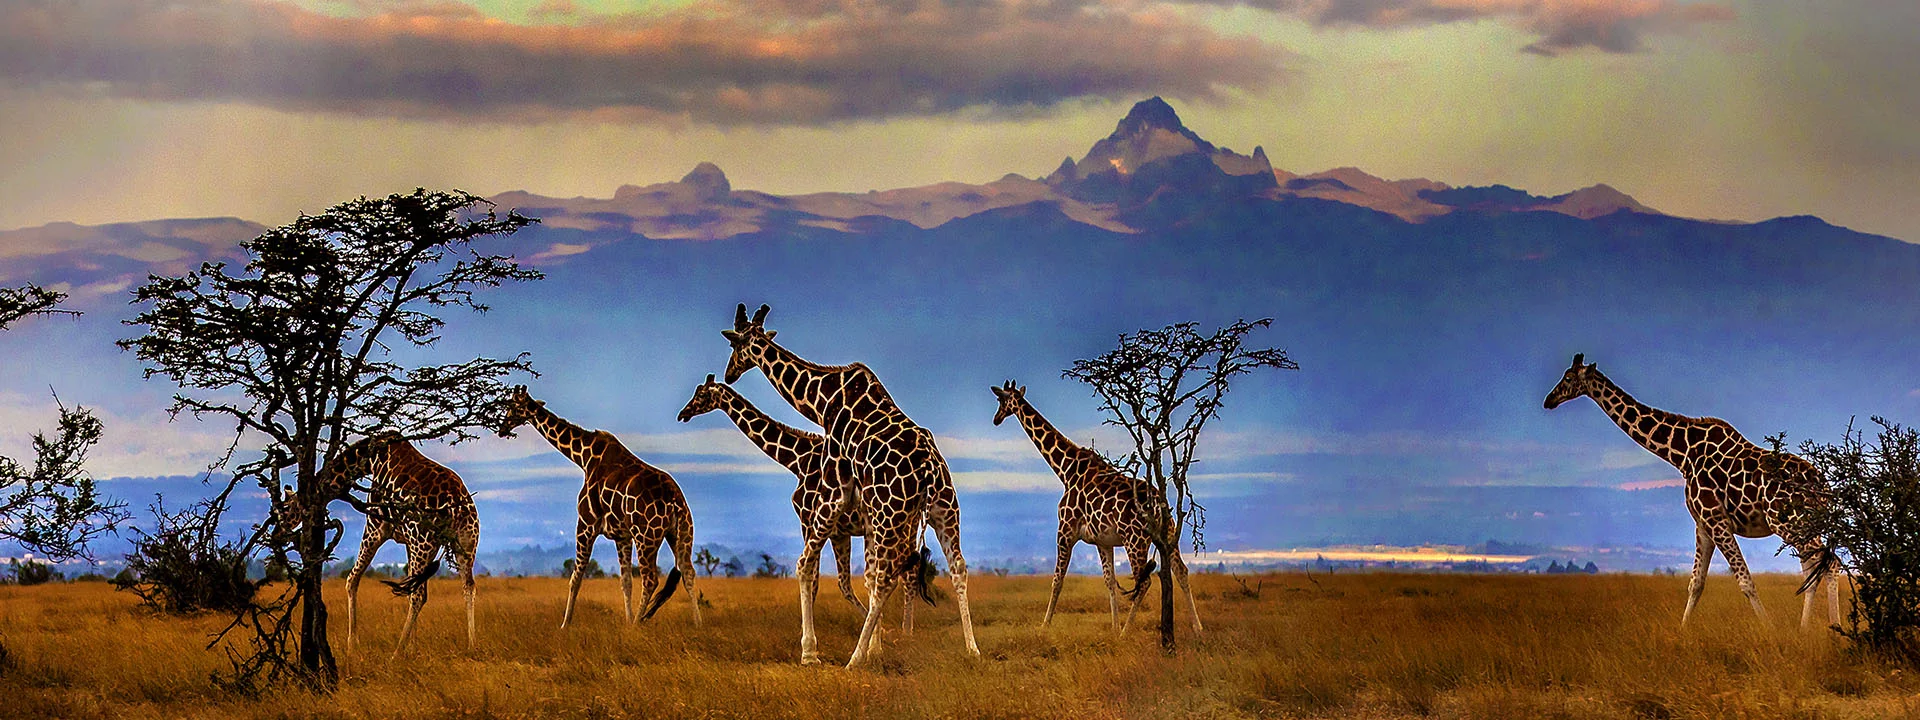 Mount Kenya Trek & Wildlife Safari Combined